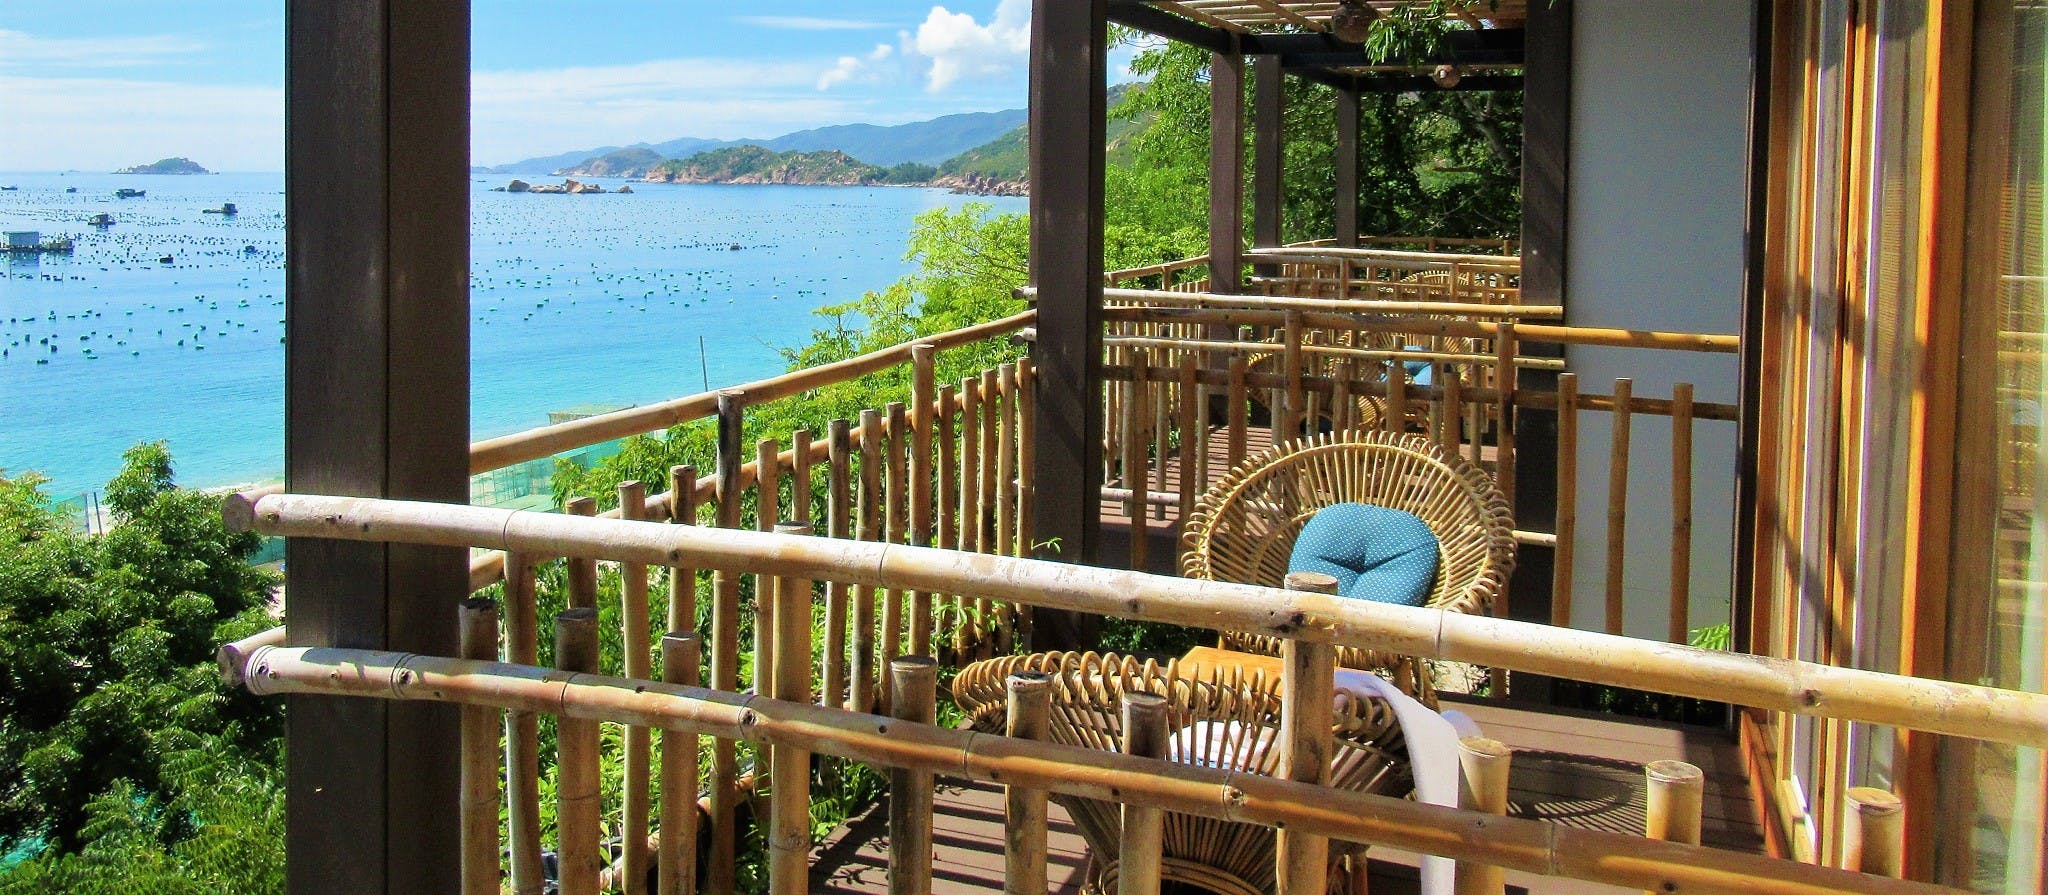 Escalade Resort, Cam Ranh Bay, Vietnam